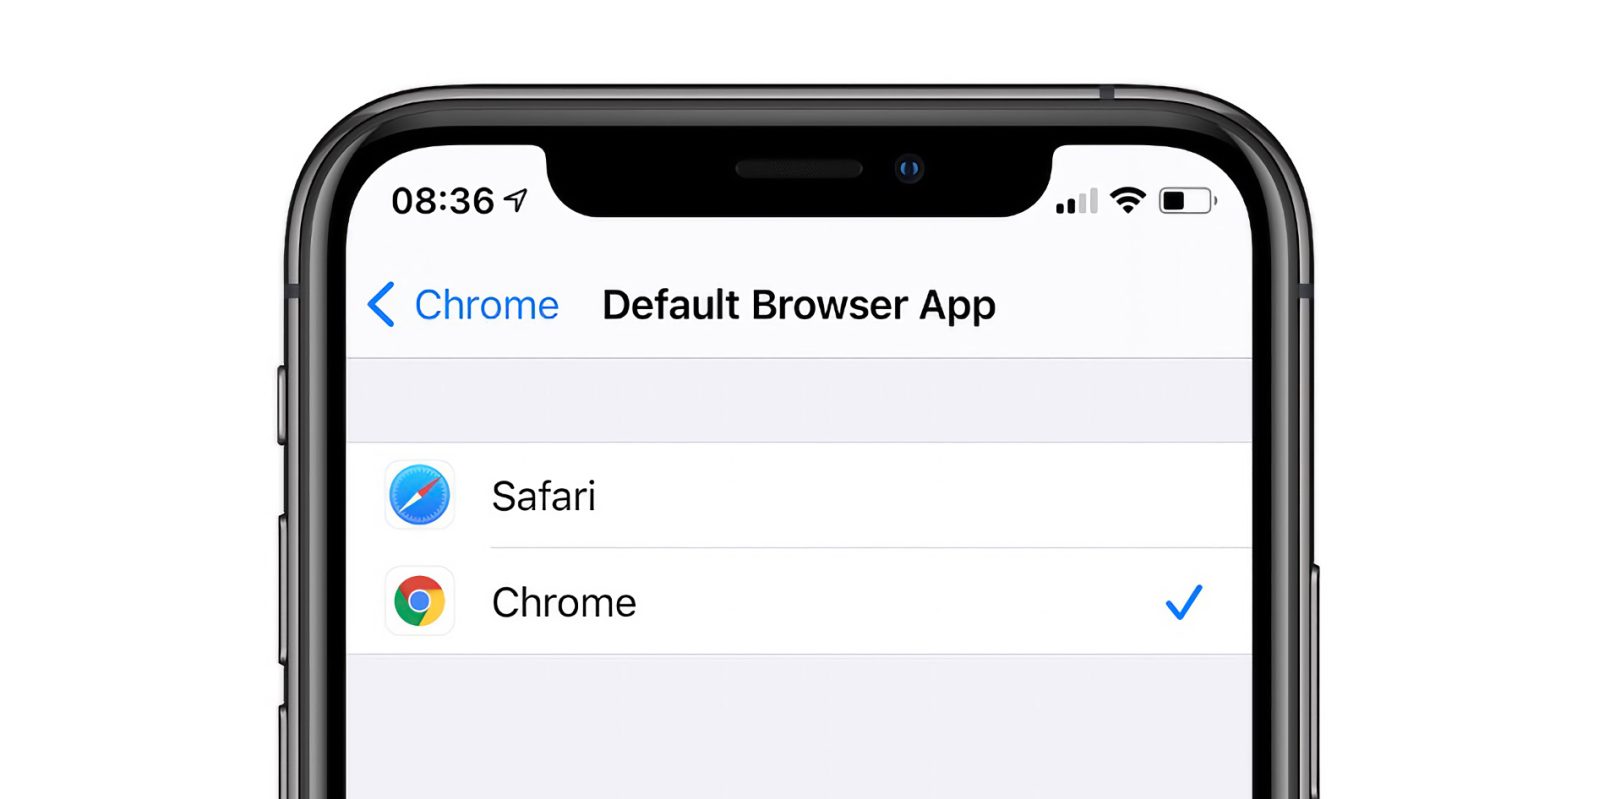 chrome-safari-default-browser-app-settings-iphone.jpeg